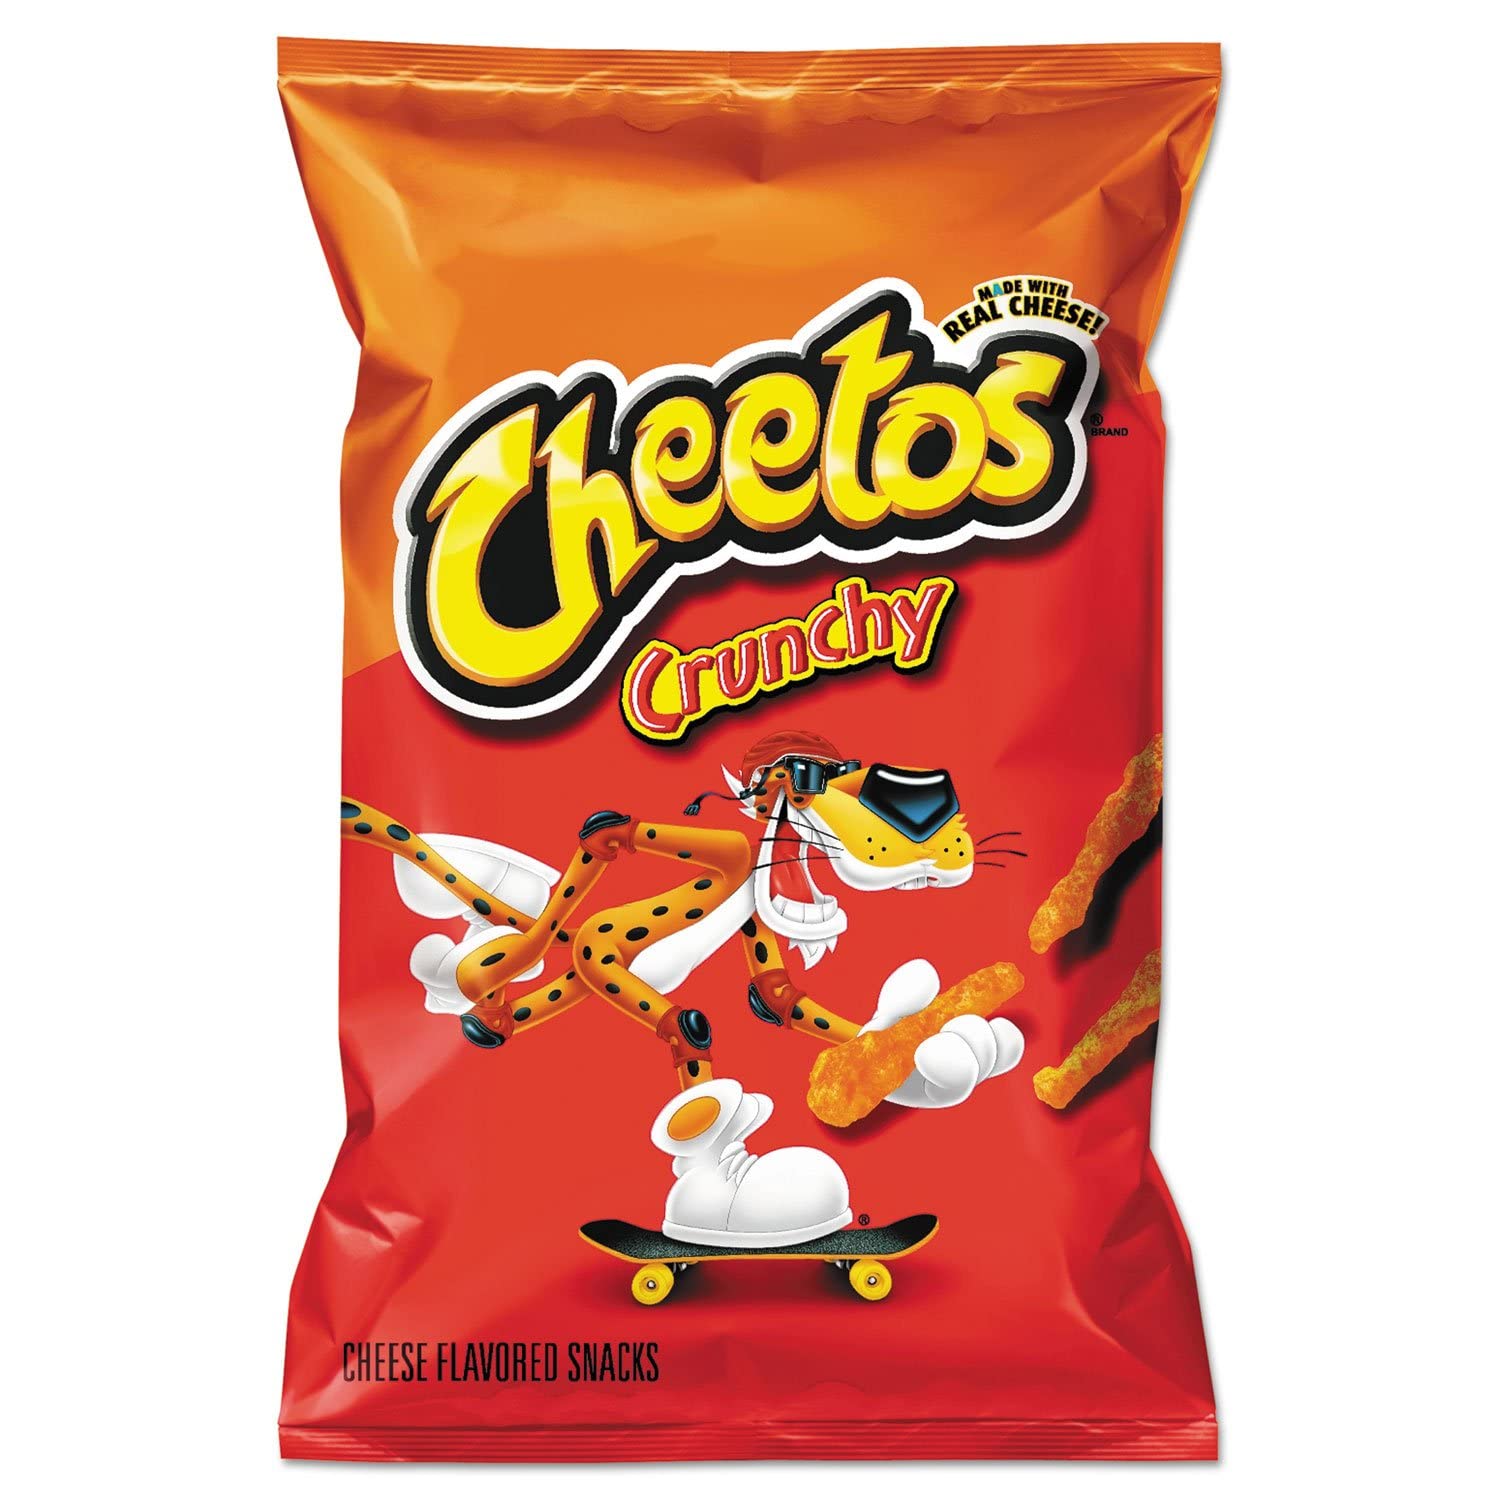 Cheetos Crunchy Pouch, 226.8g